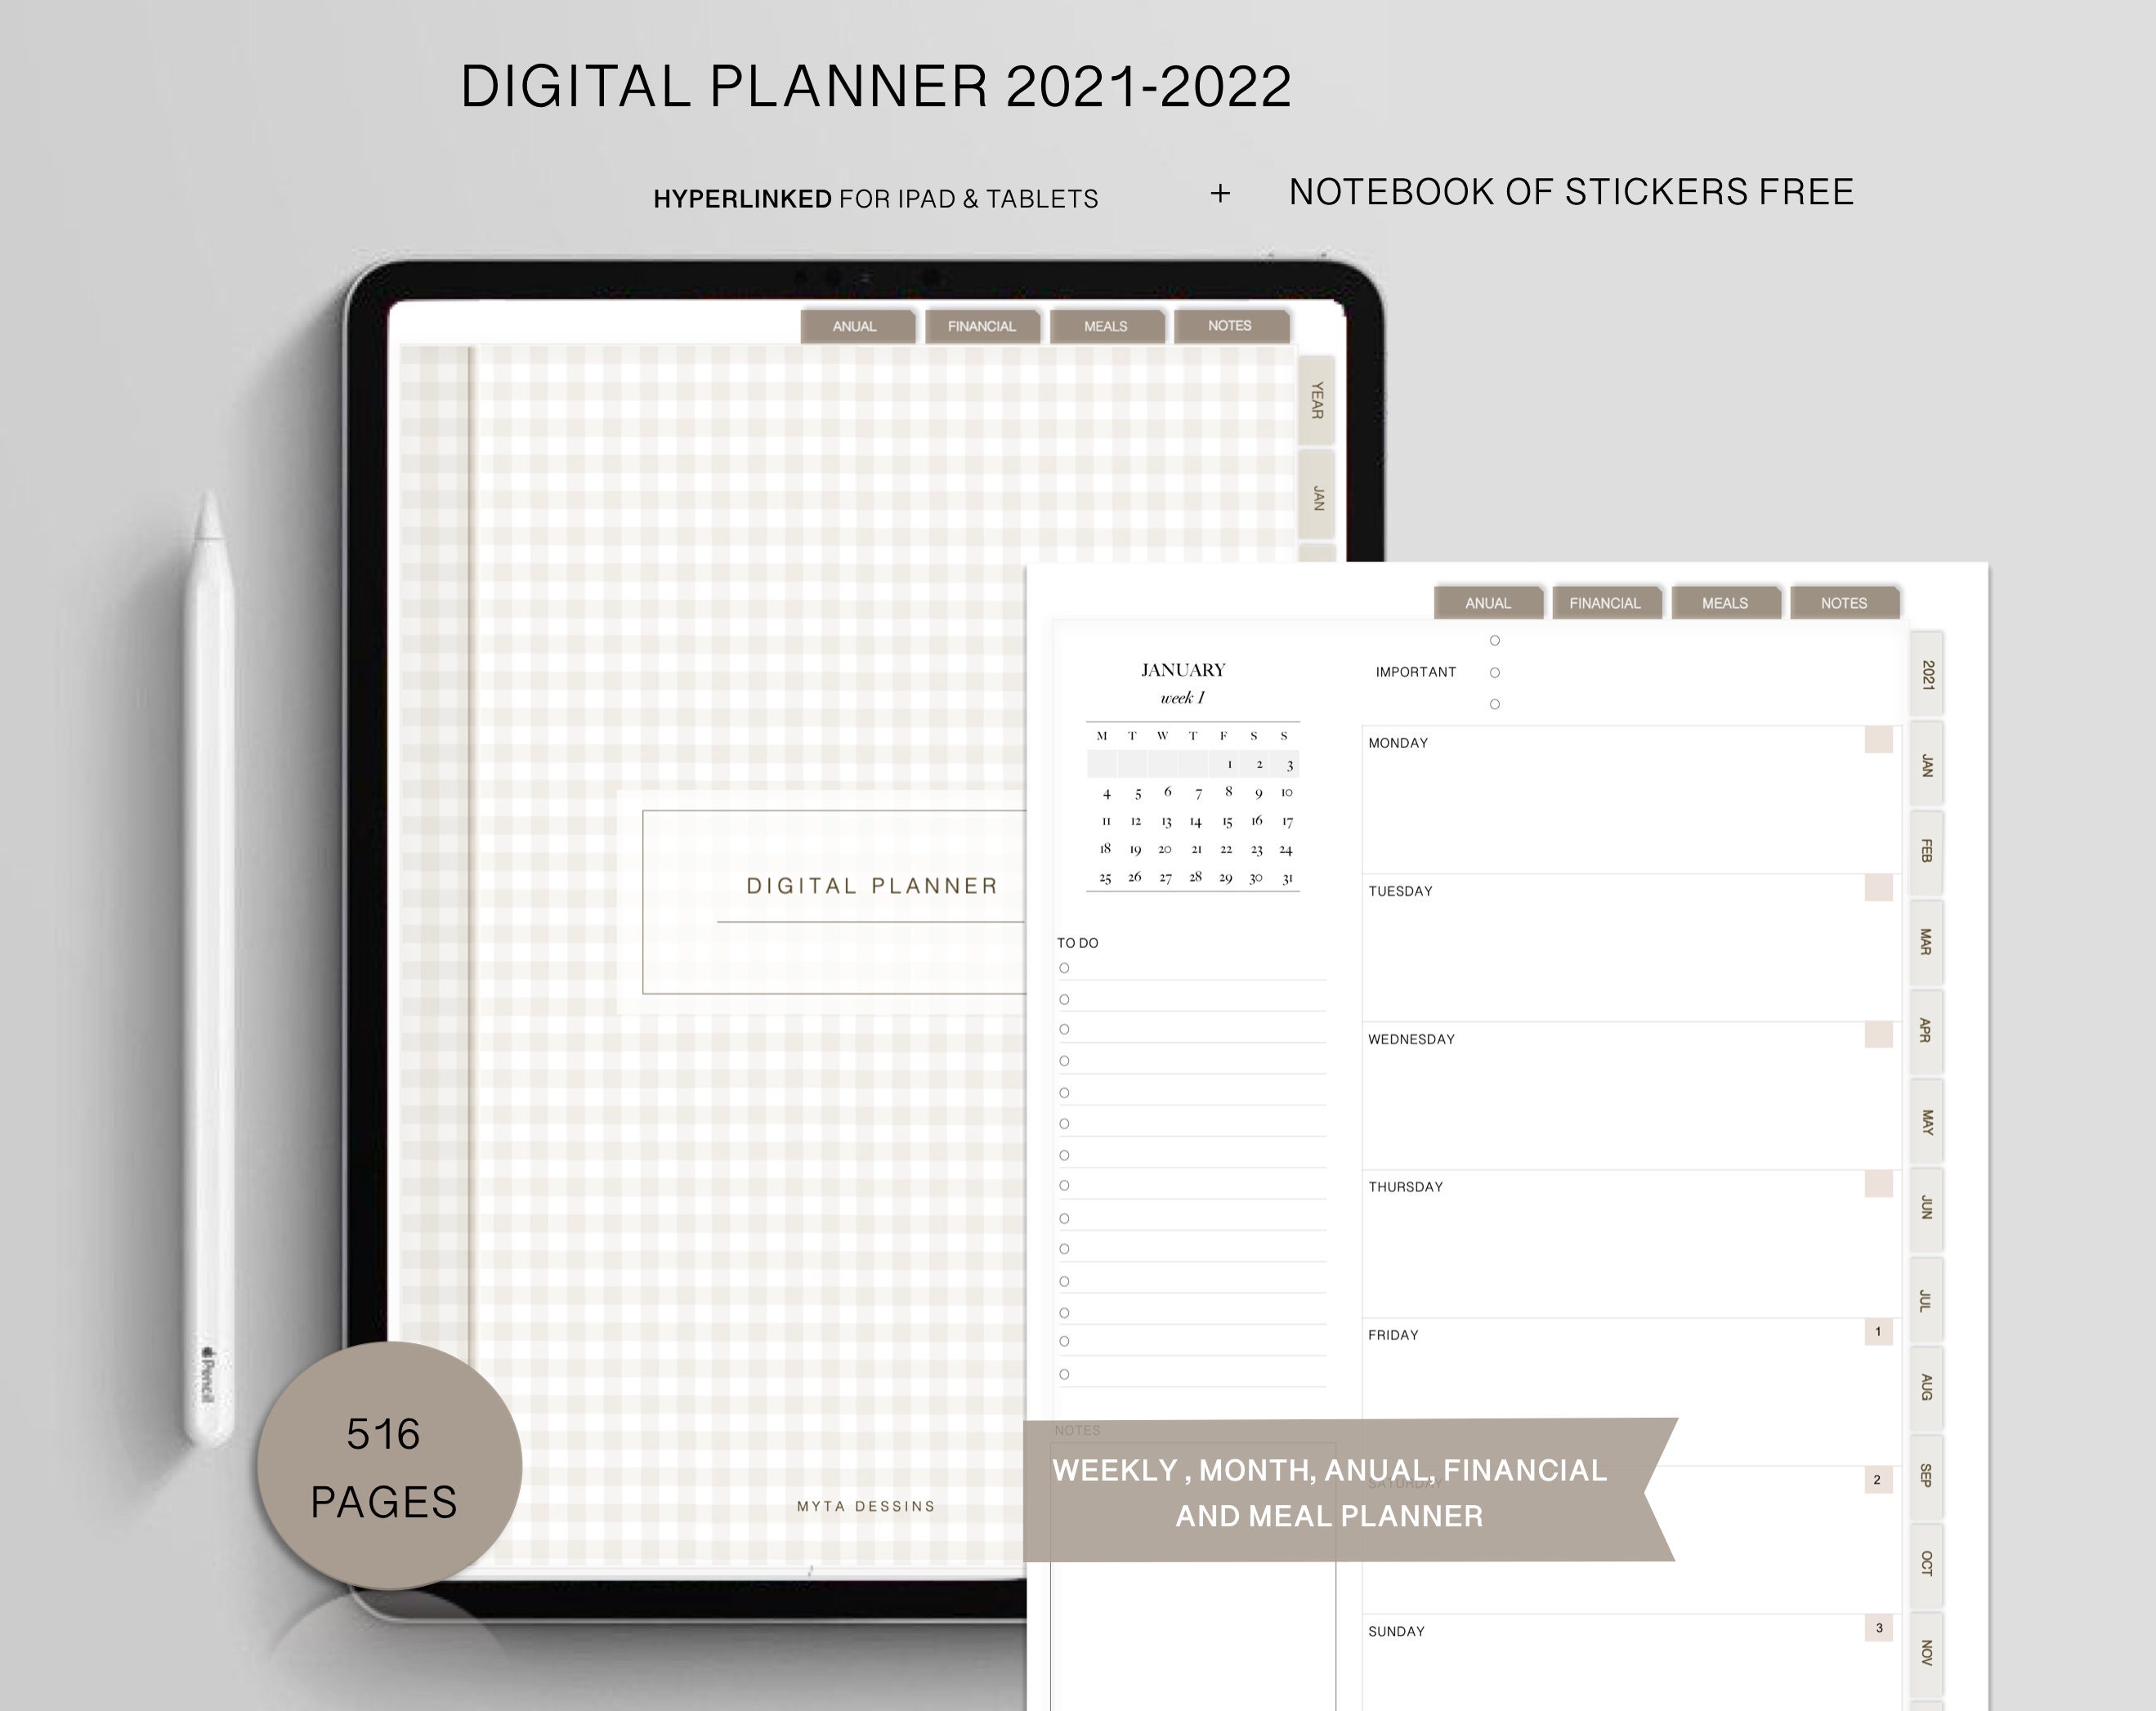 Plans 2021